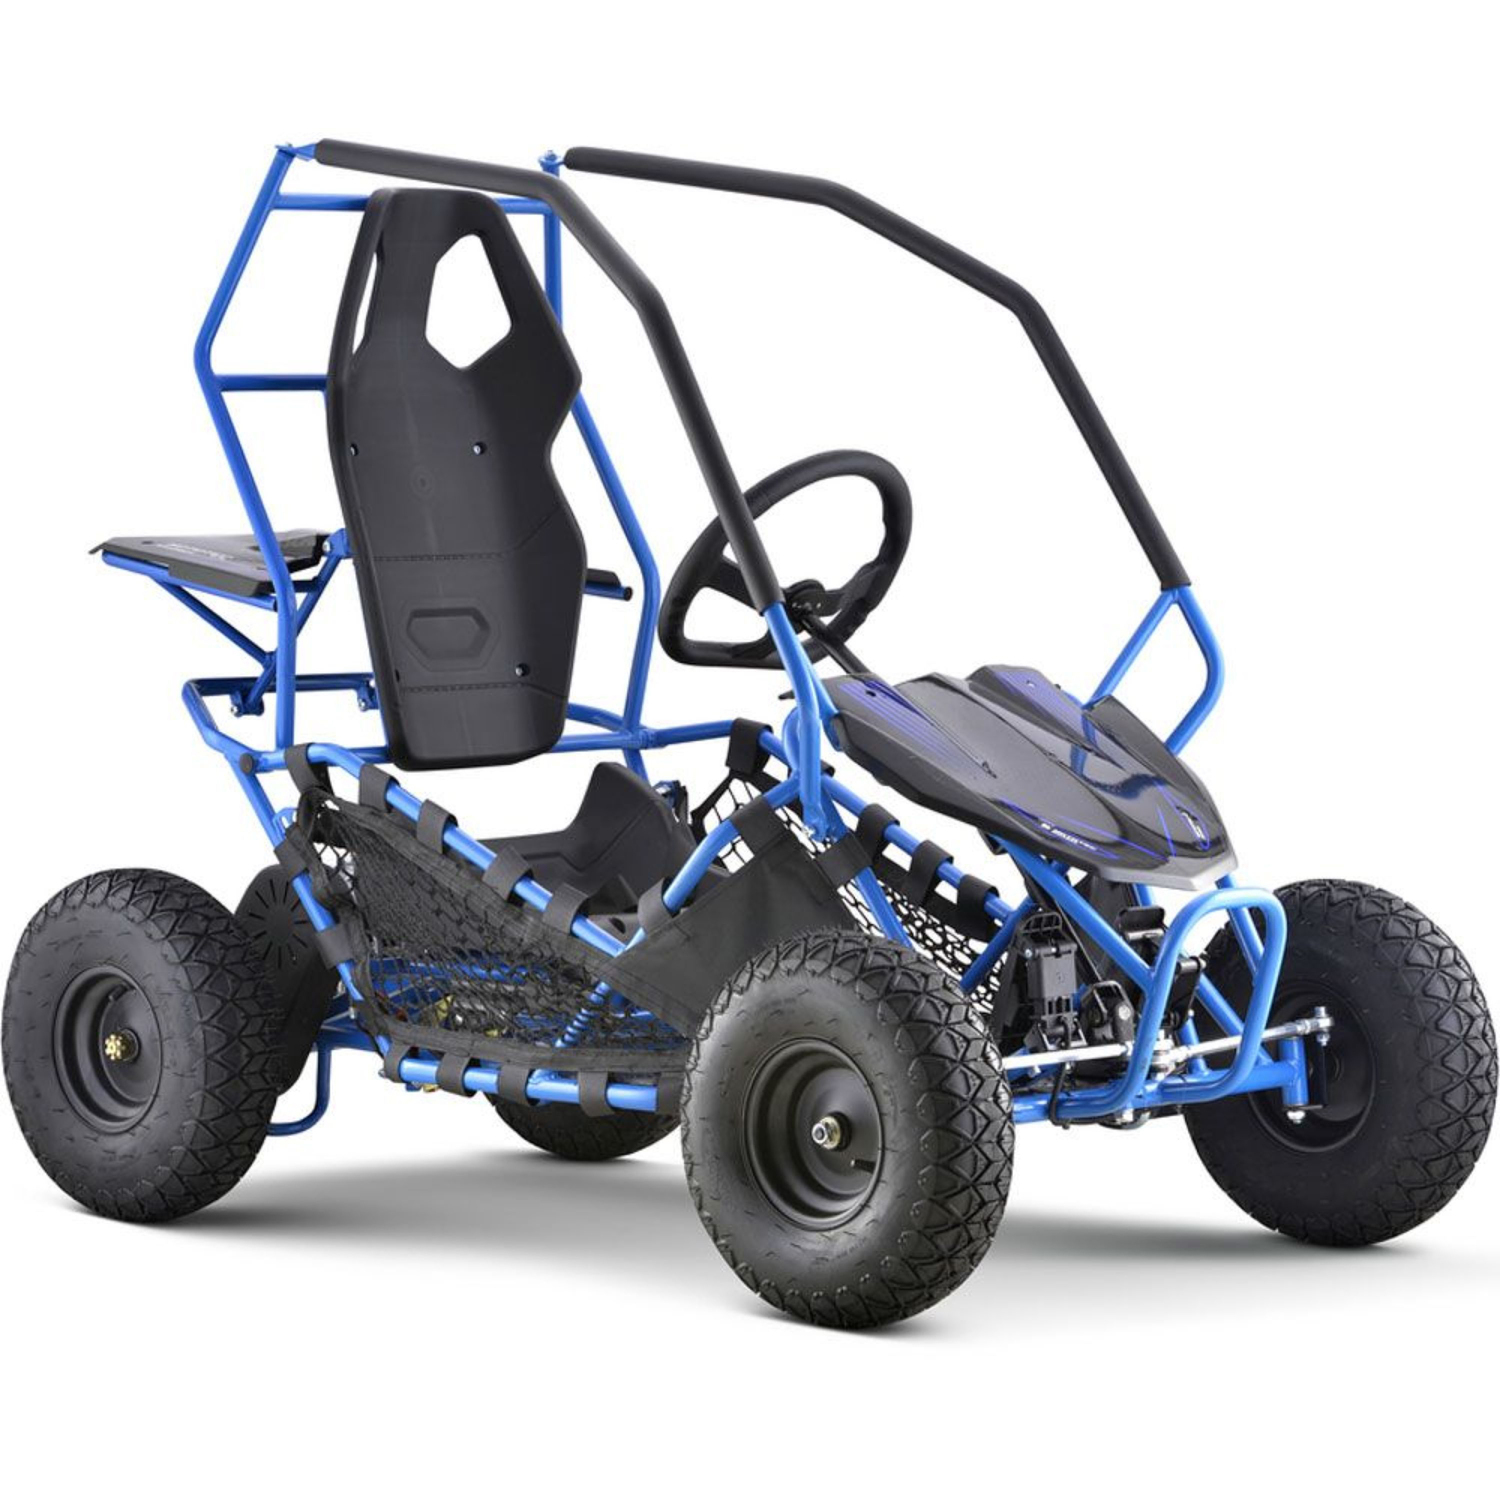 MotoTec Maverick Electric Go Kart 36v 1000w Blue - image 1 of 8